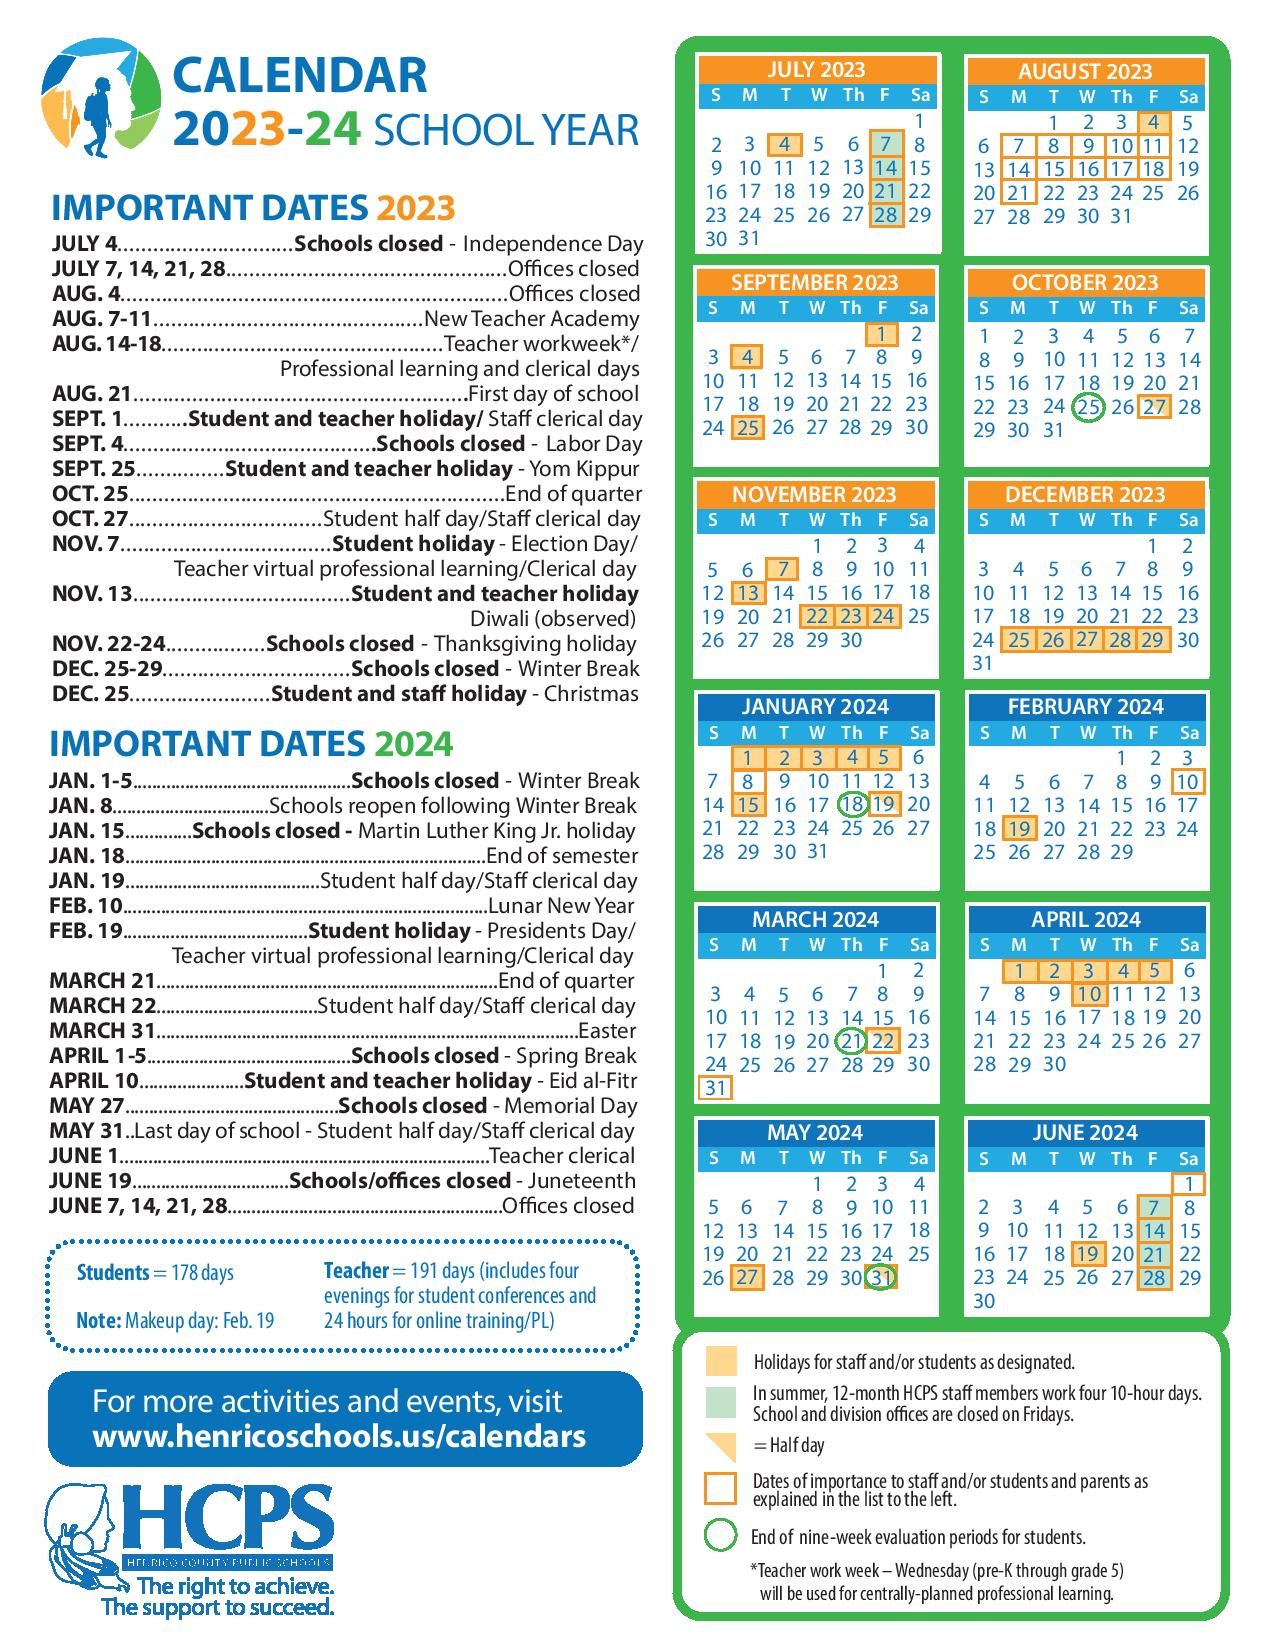 Henrico County Public Schools Calendar 2023 2024 Holidays